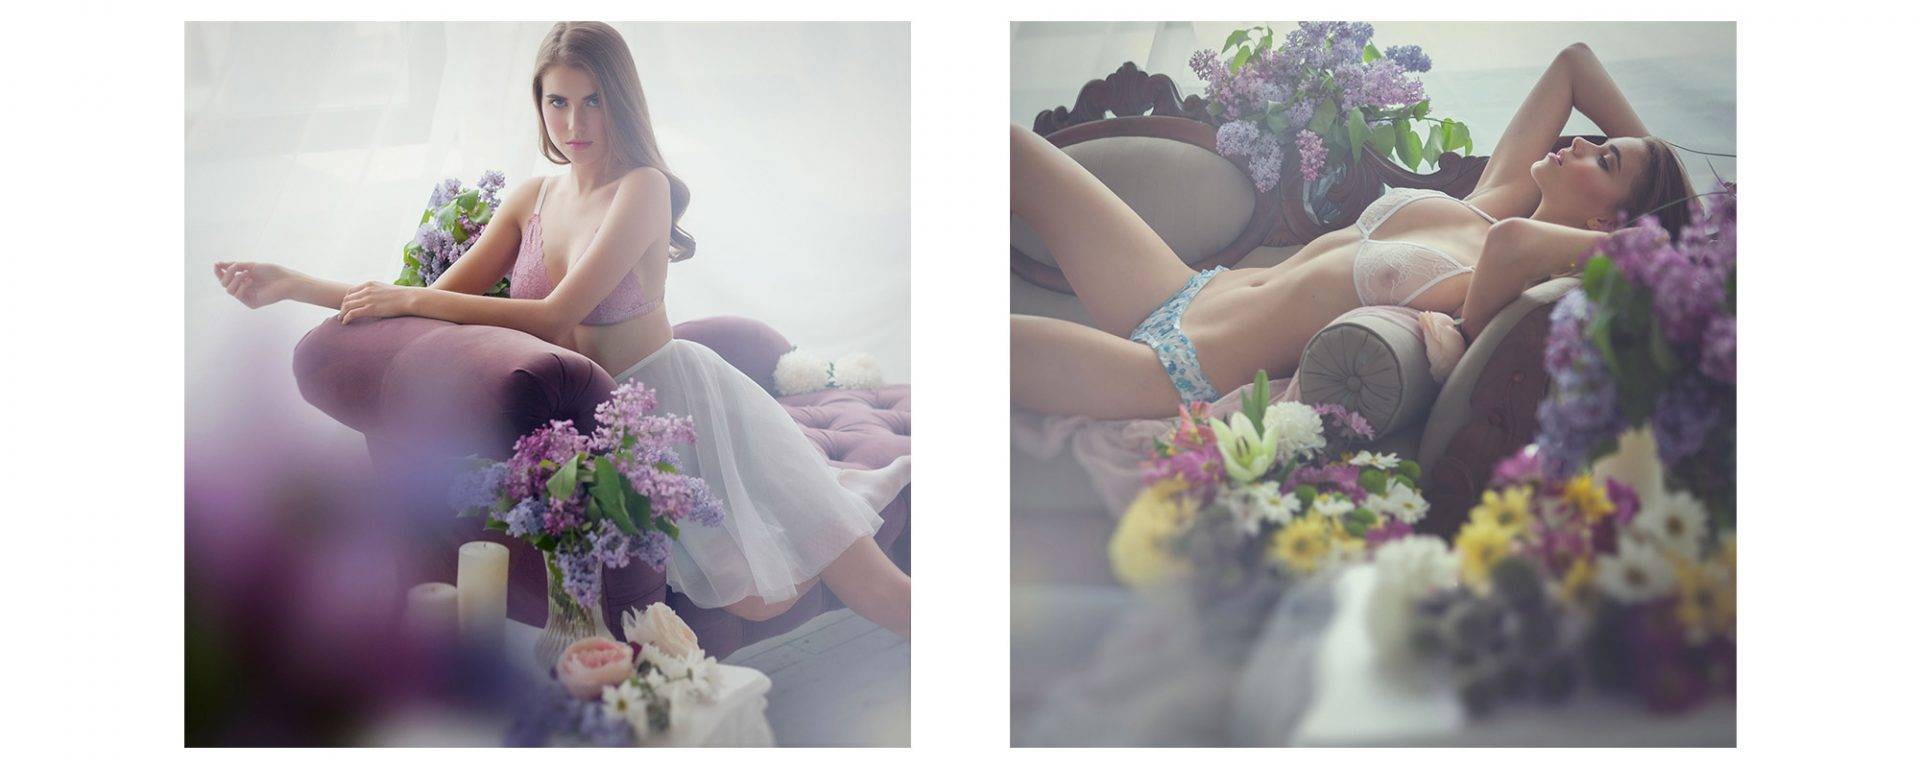 Bridal boudoir photos with flowers